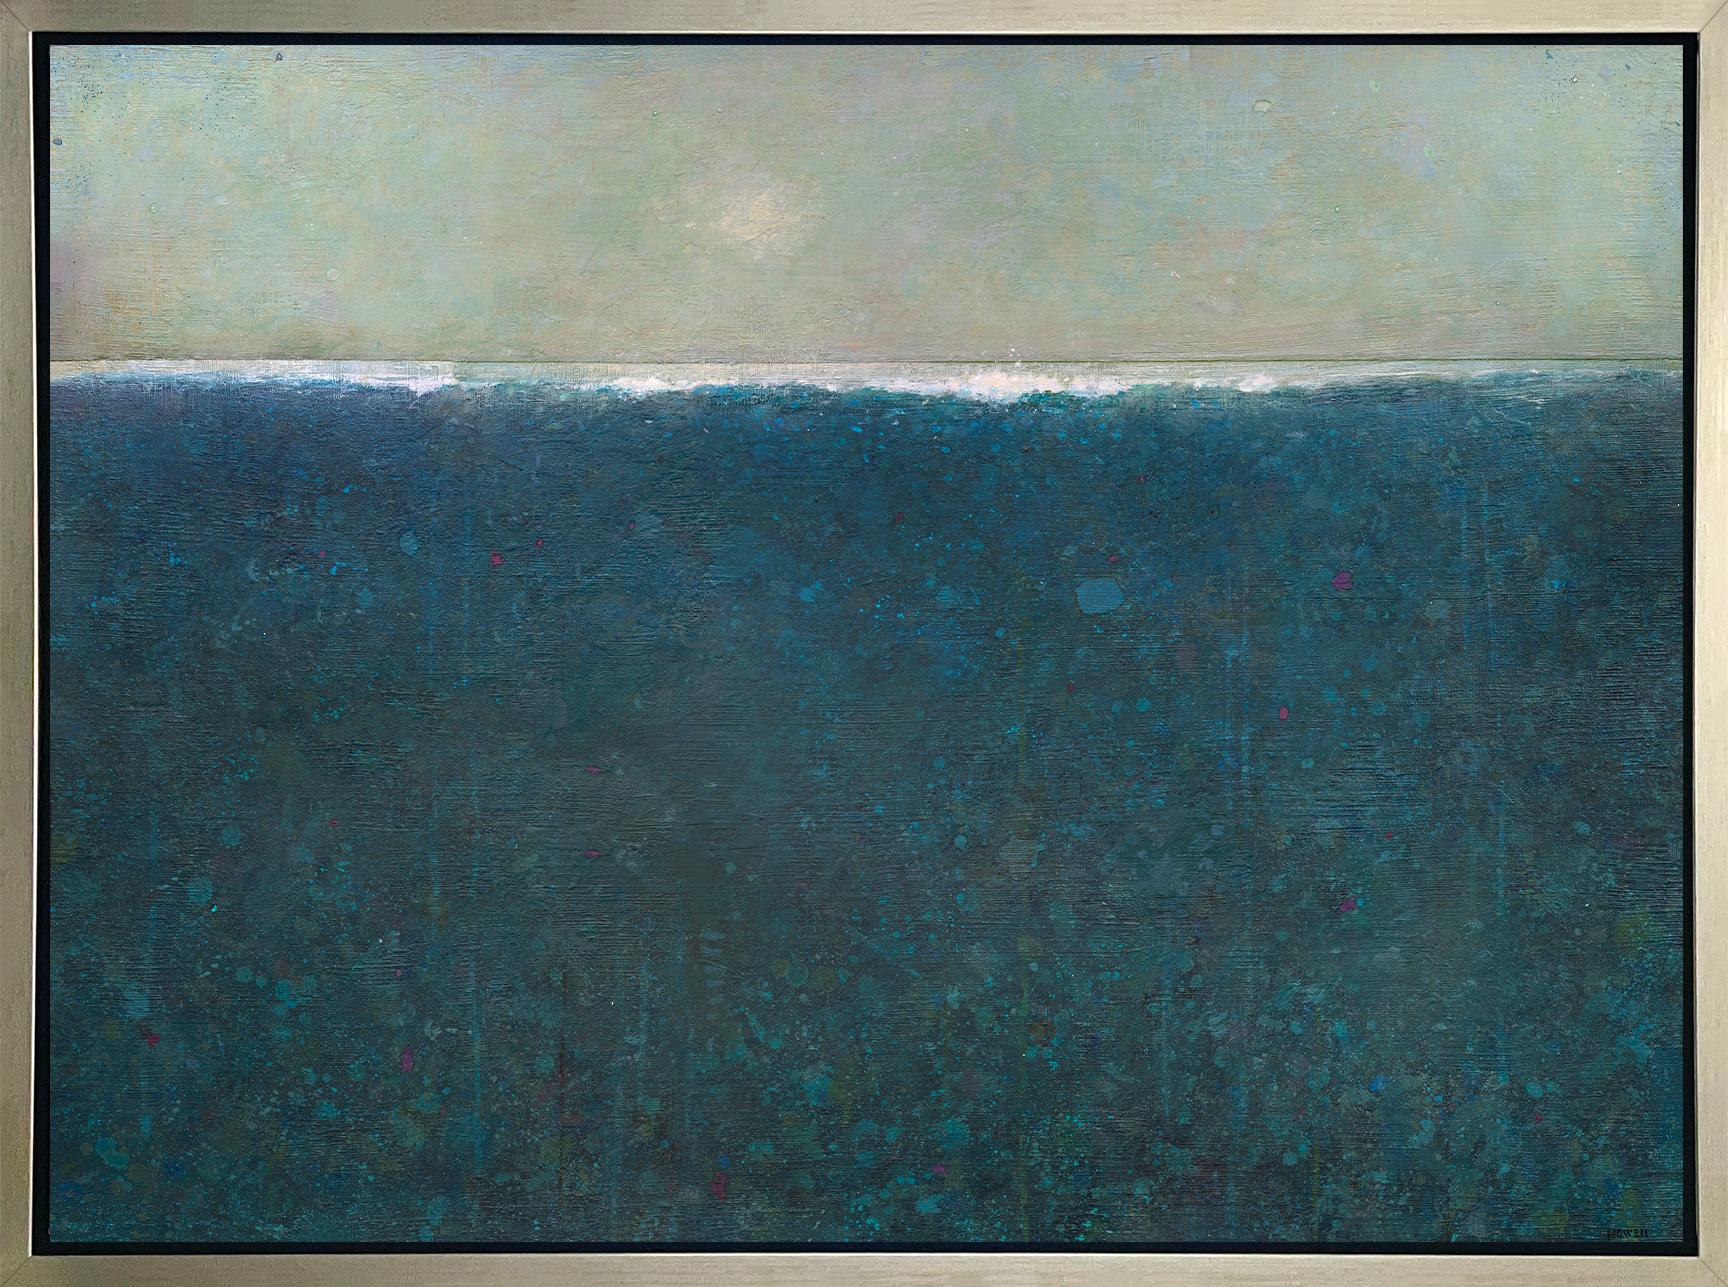 Abstract Print Elwood Howell - "Ocean,"" Tirage giclée en édition limitée, 36"" x 48"